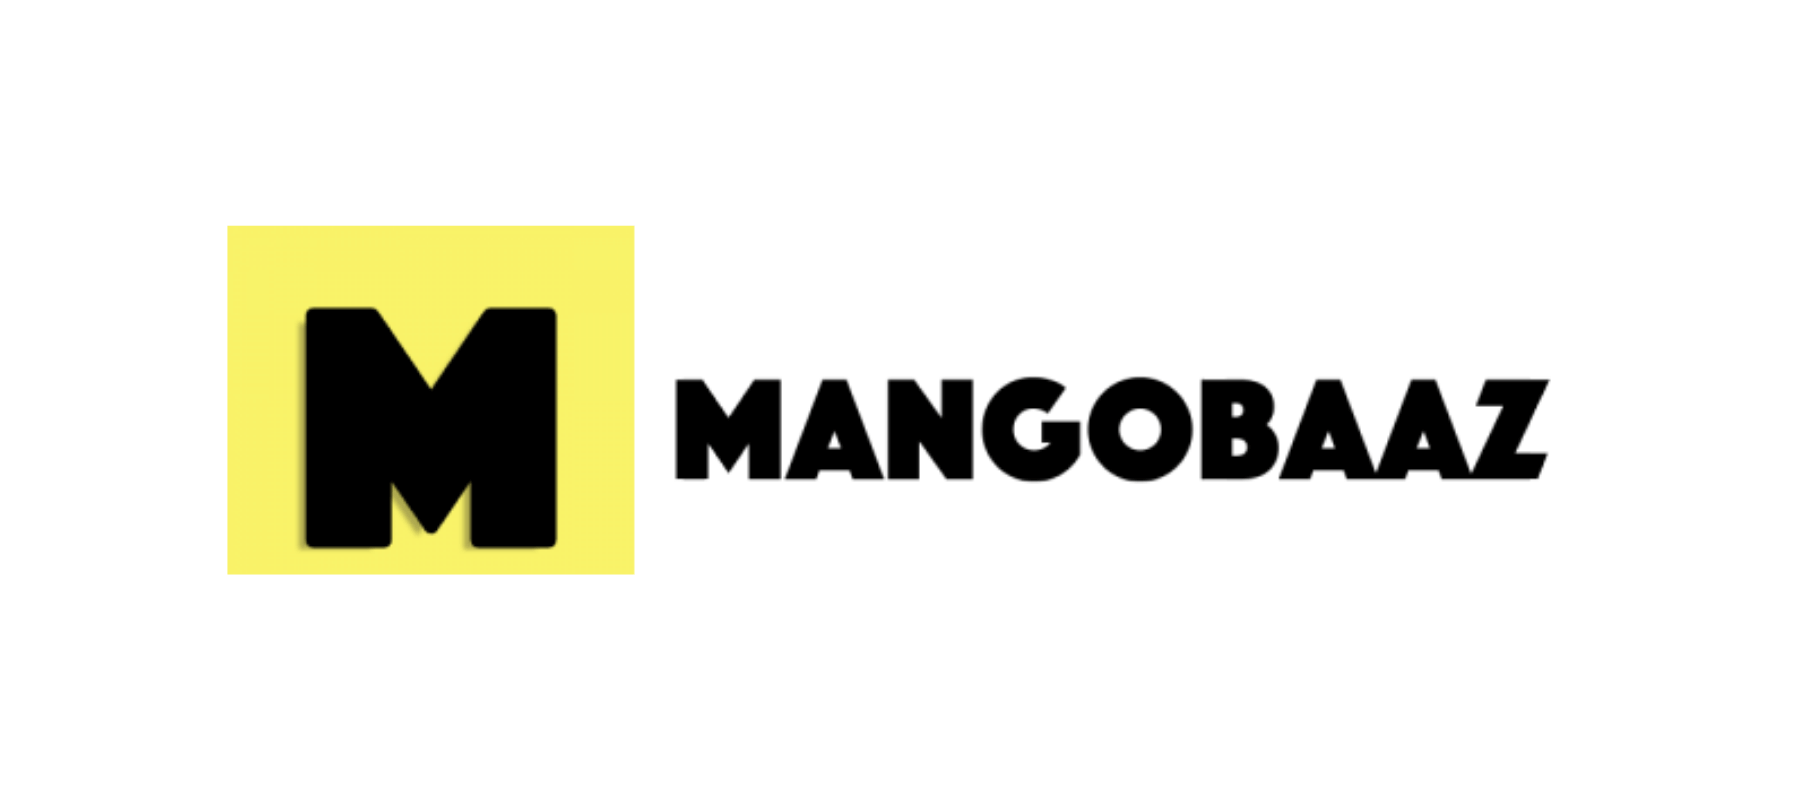 MangoBaaz - The Best Bedding In Pakistan